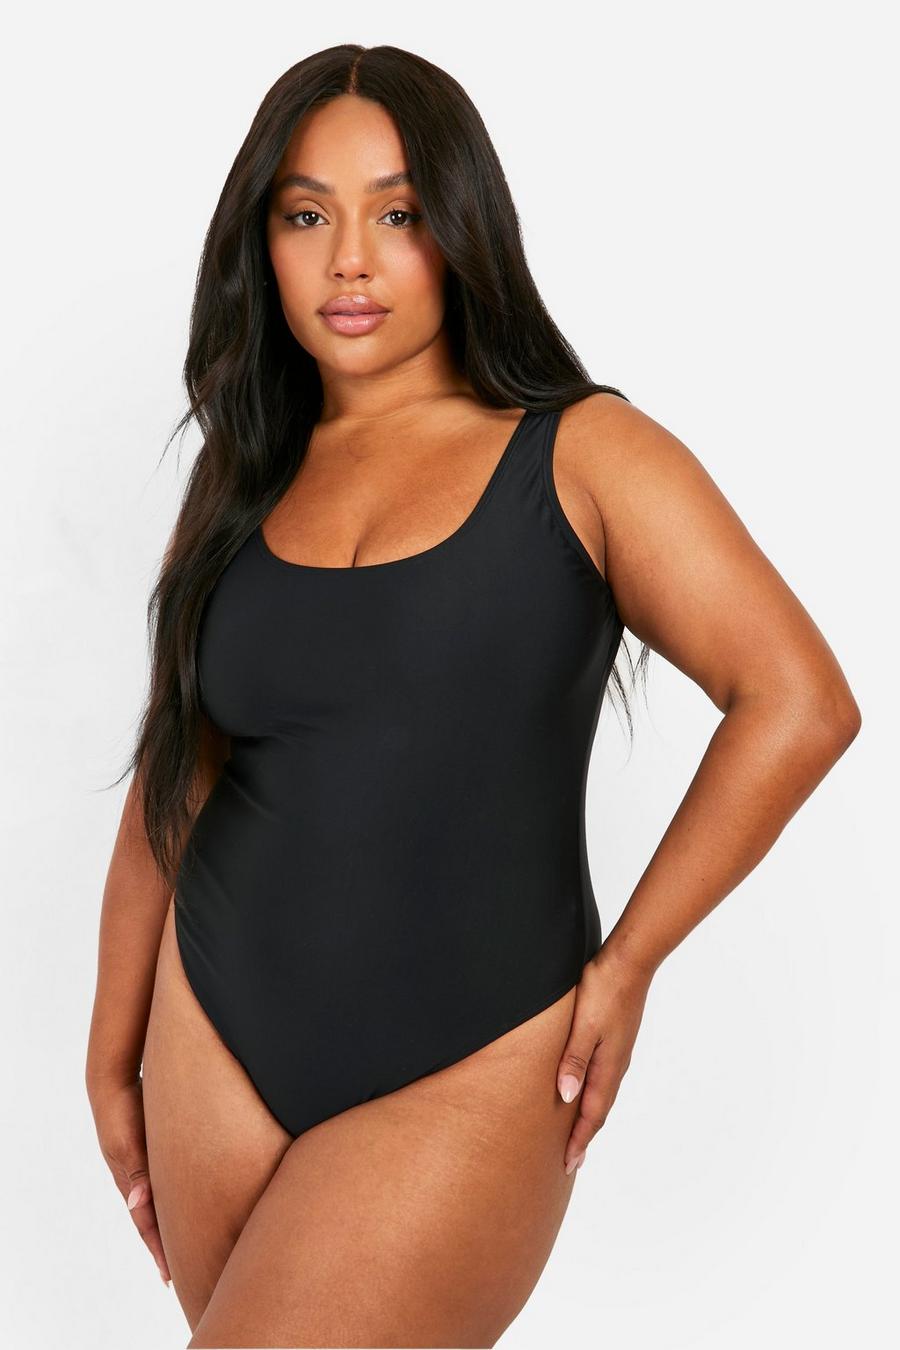 Plus Size Bodysuit for Women Tummy